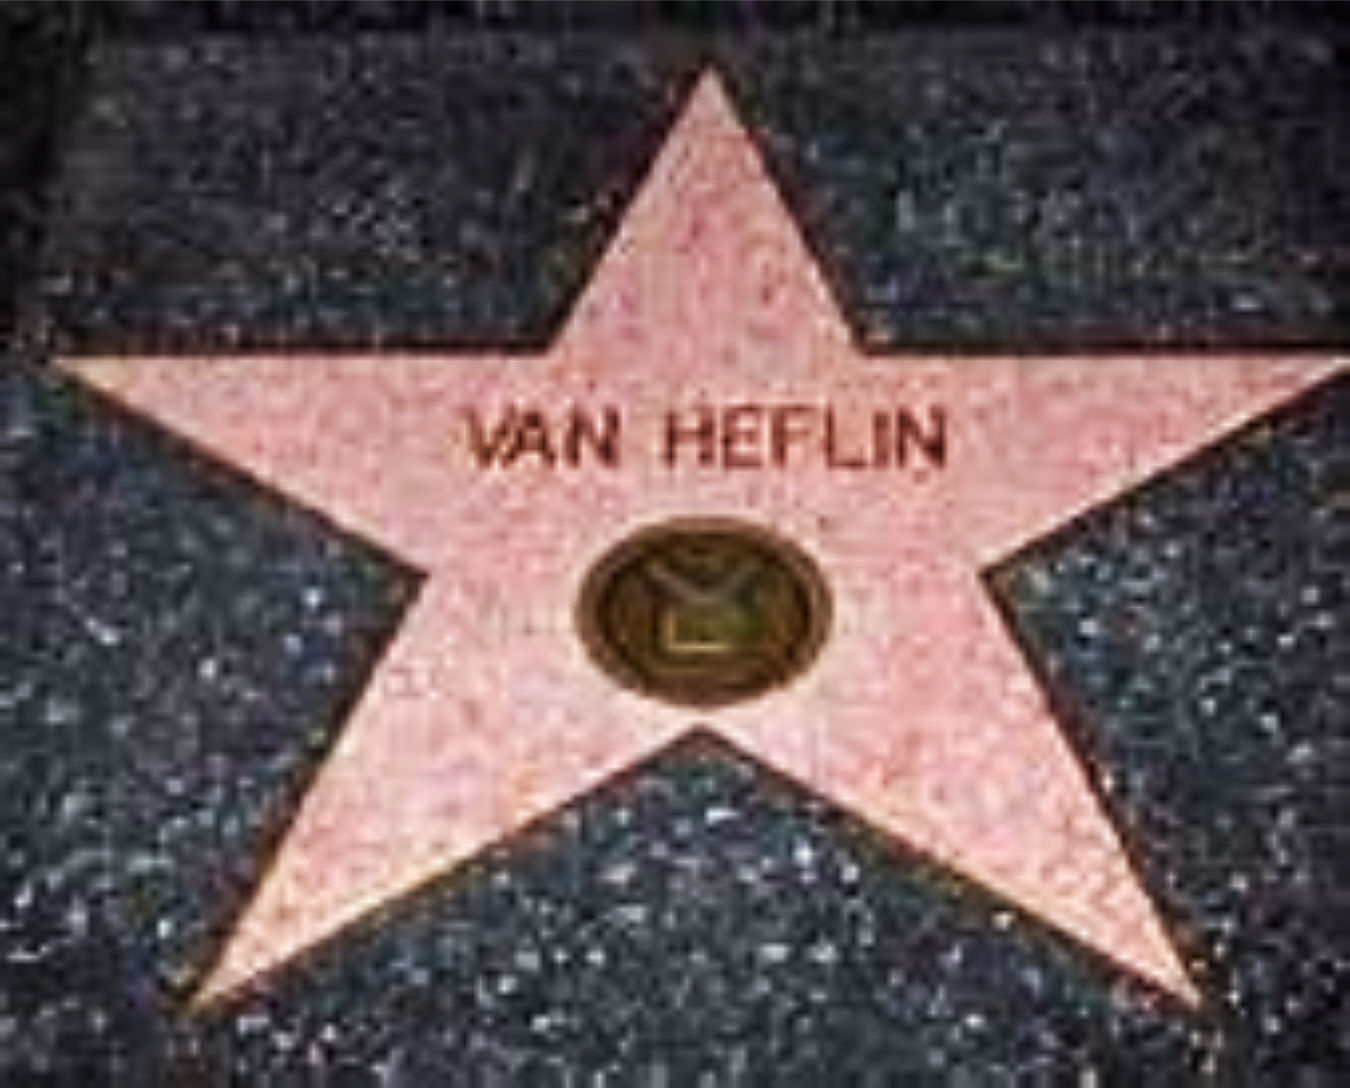 VAN HEFLIN STAR